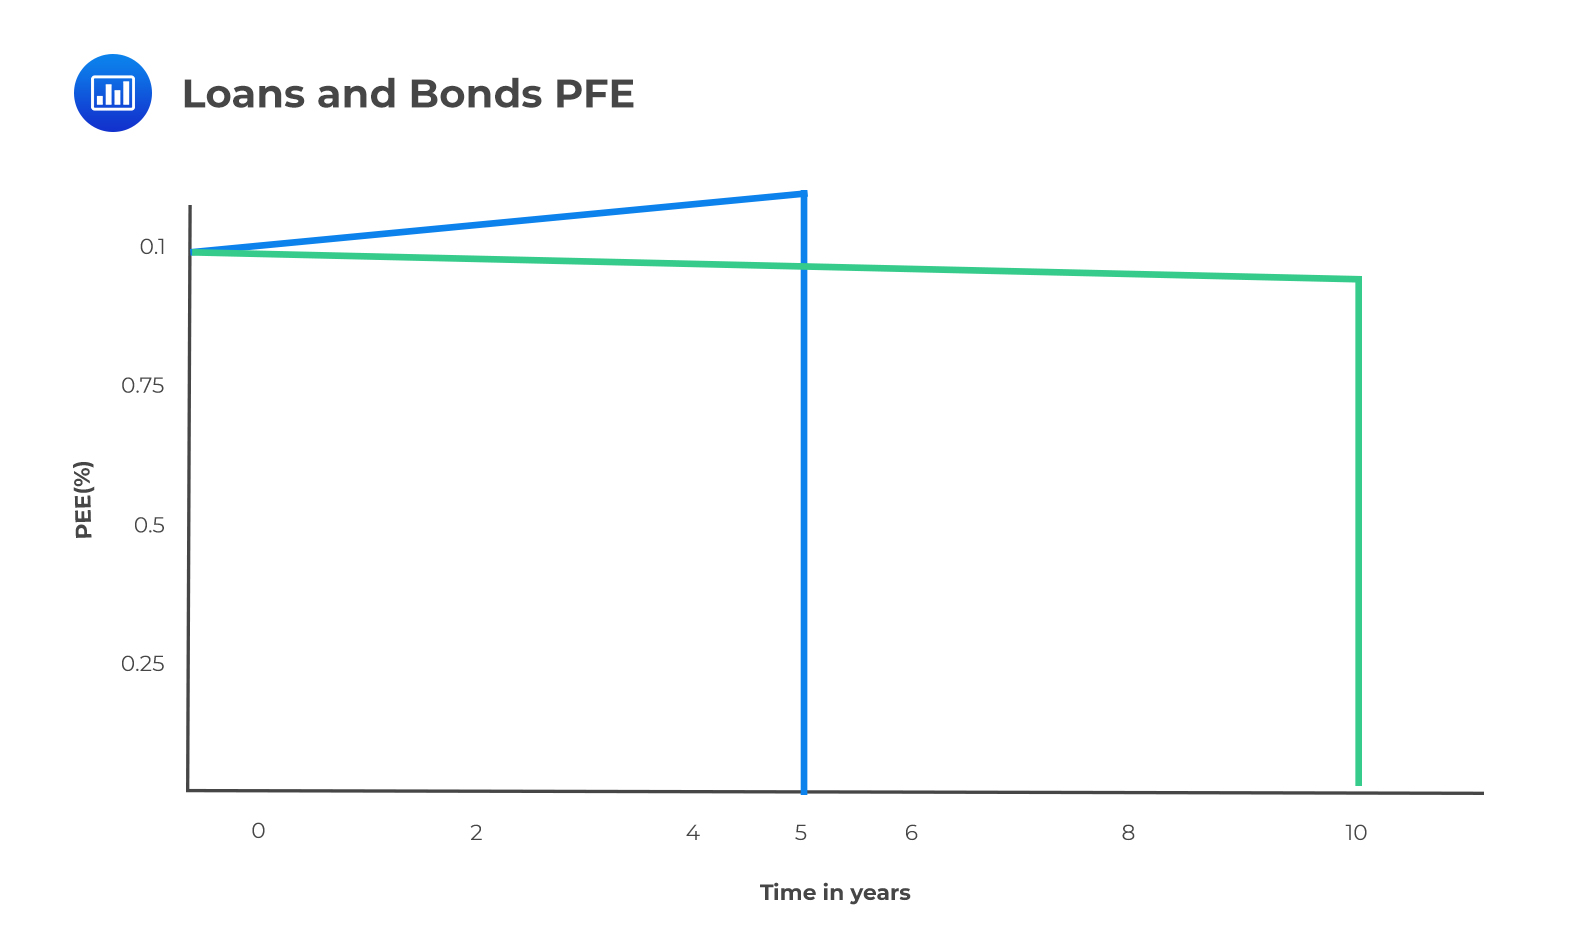 Loans and Bonds PFE